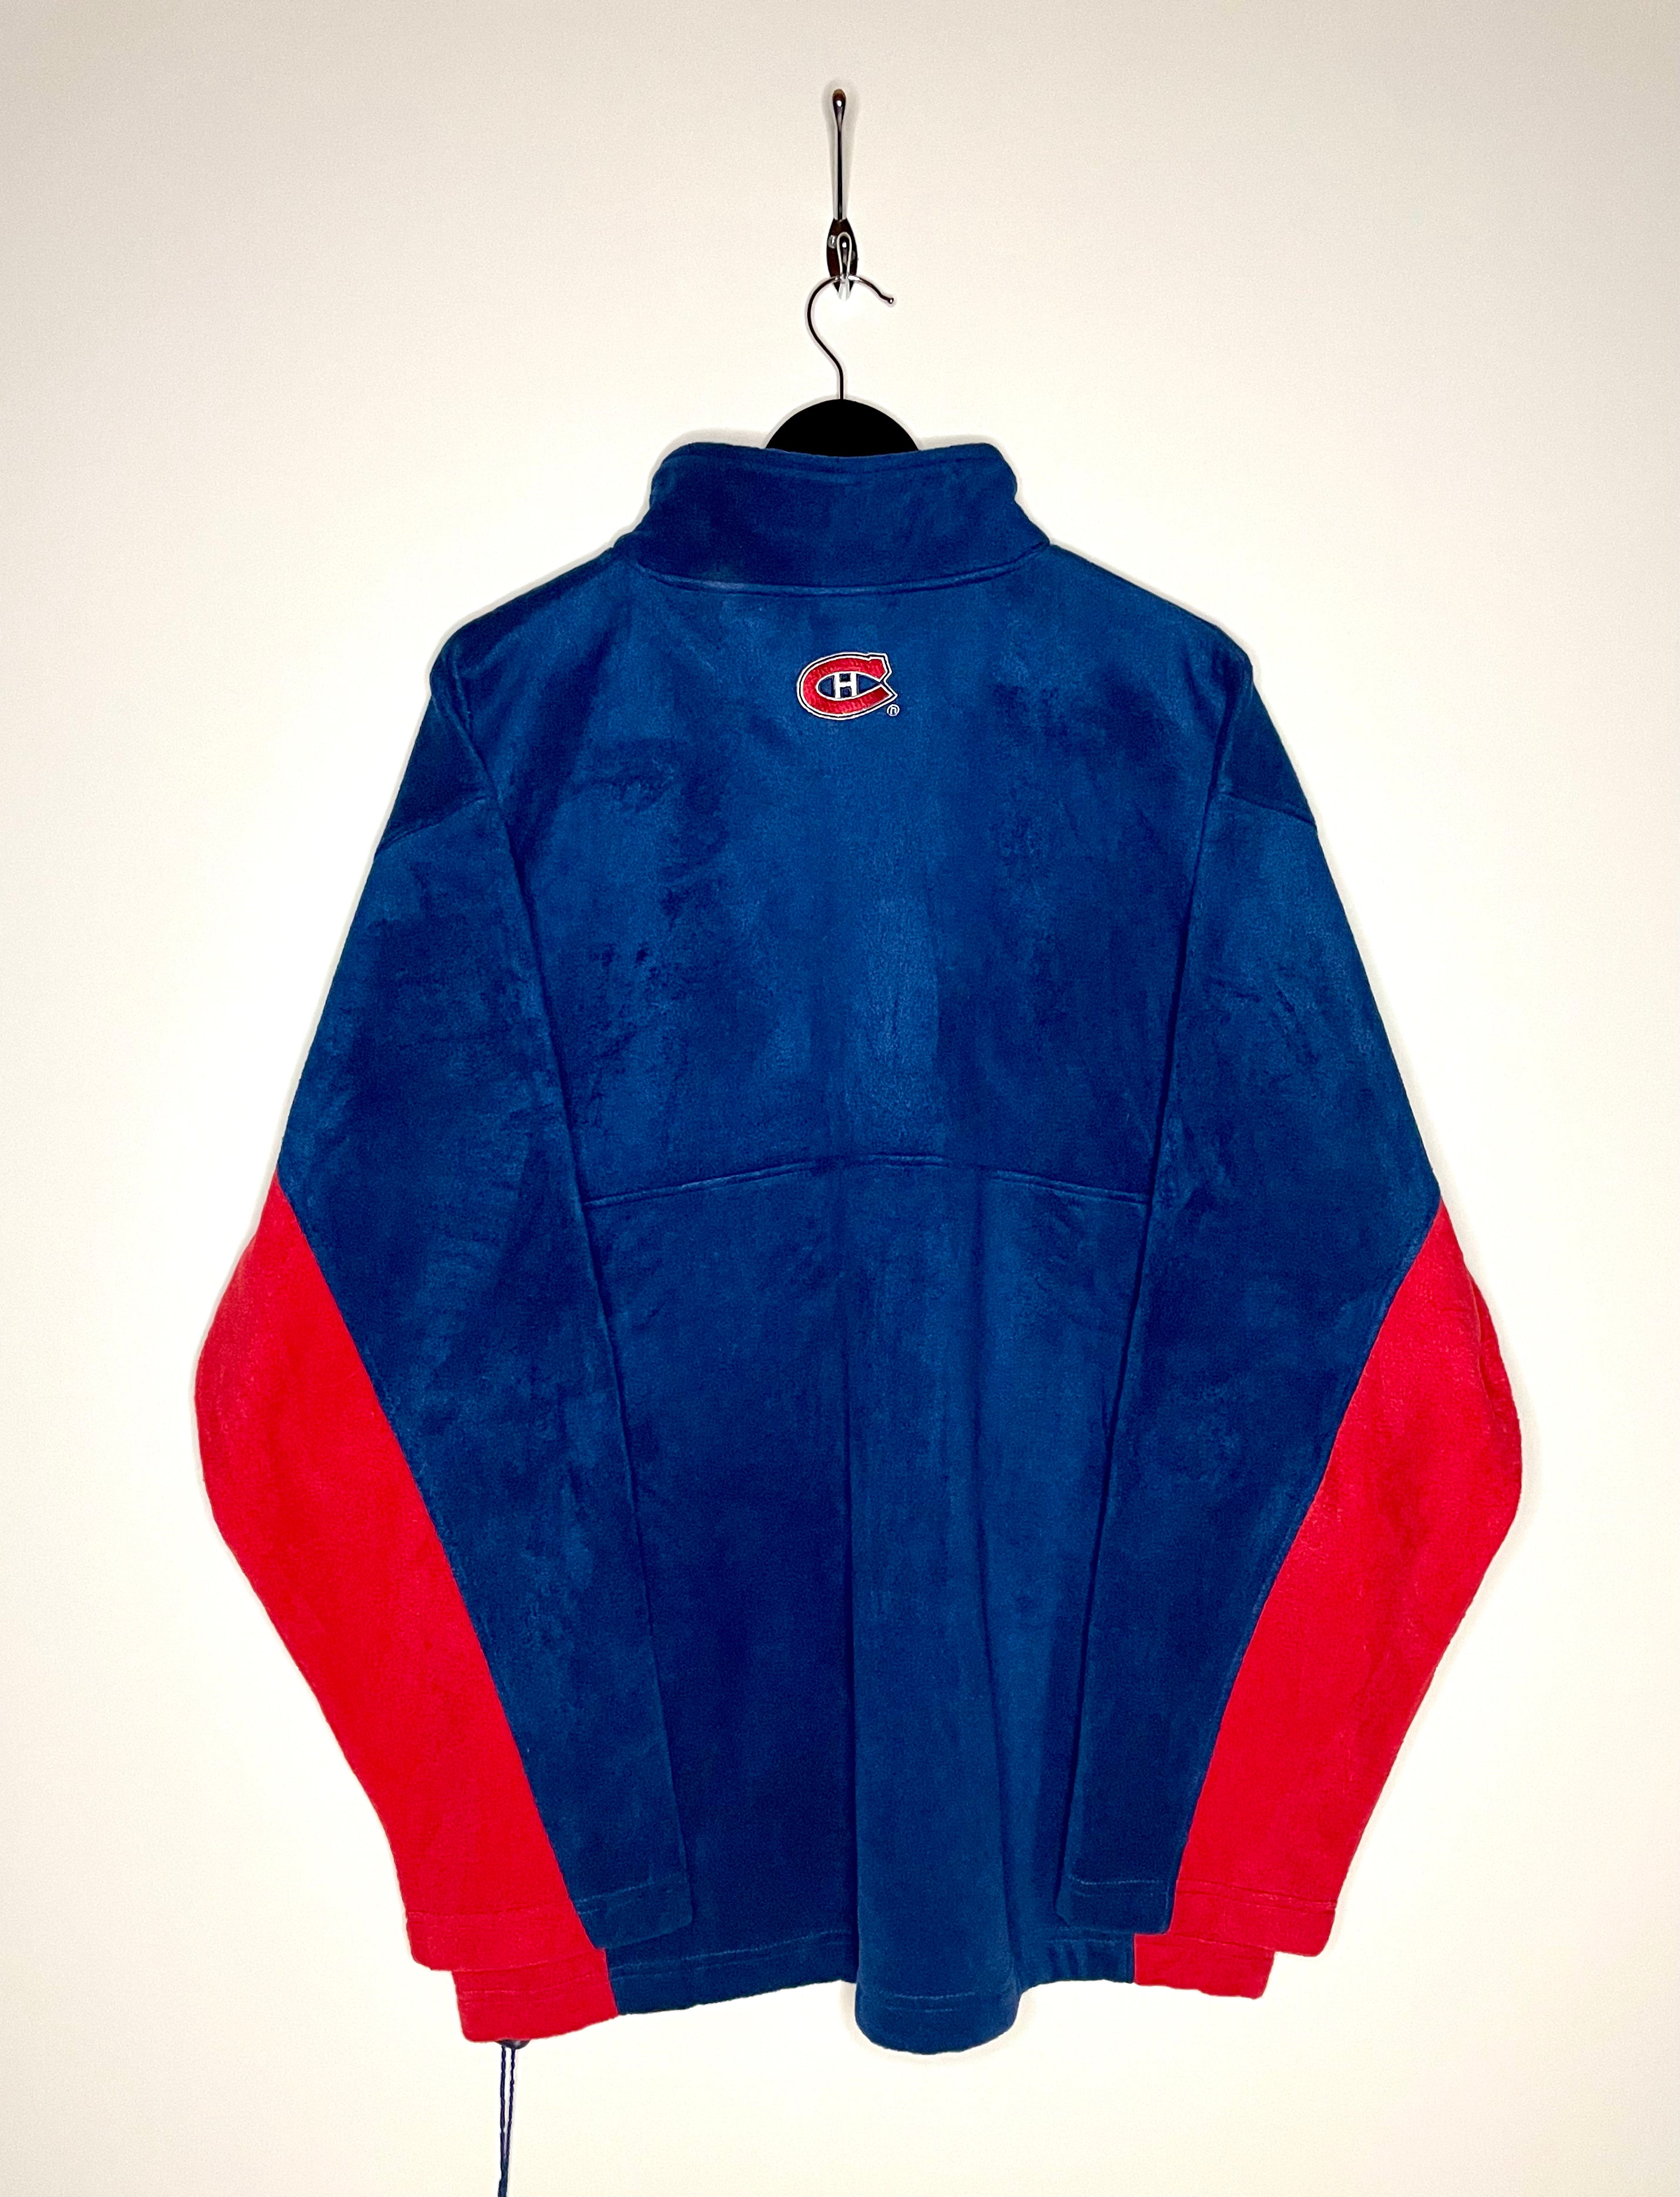 NHL Fleece Q-Zip Sweater Montreal Canadiens Blau/Rot Größe L